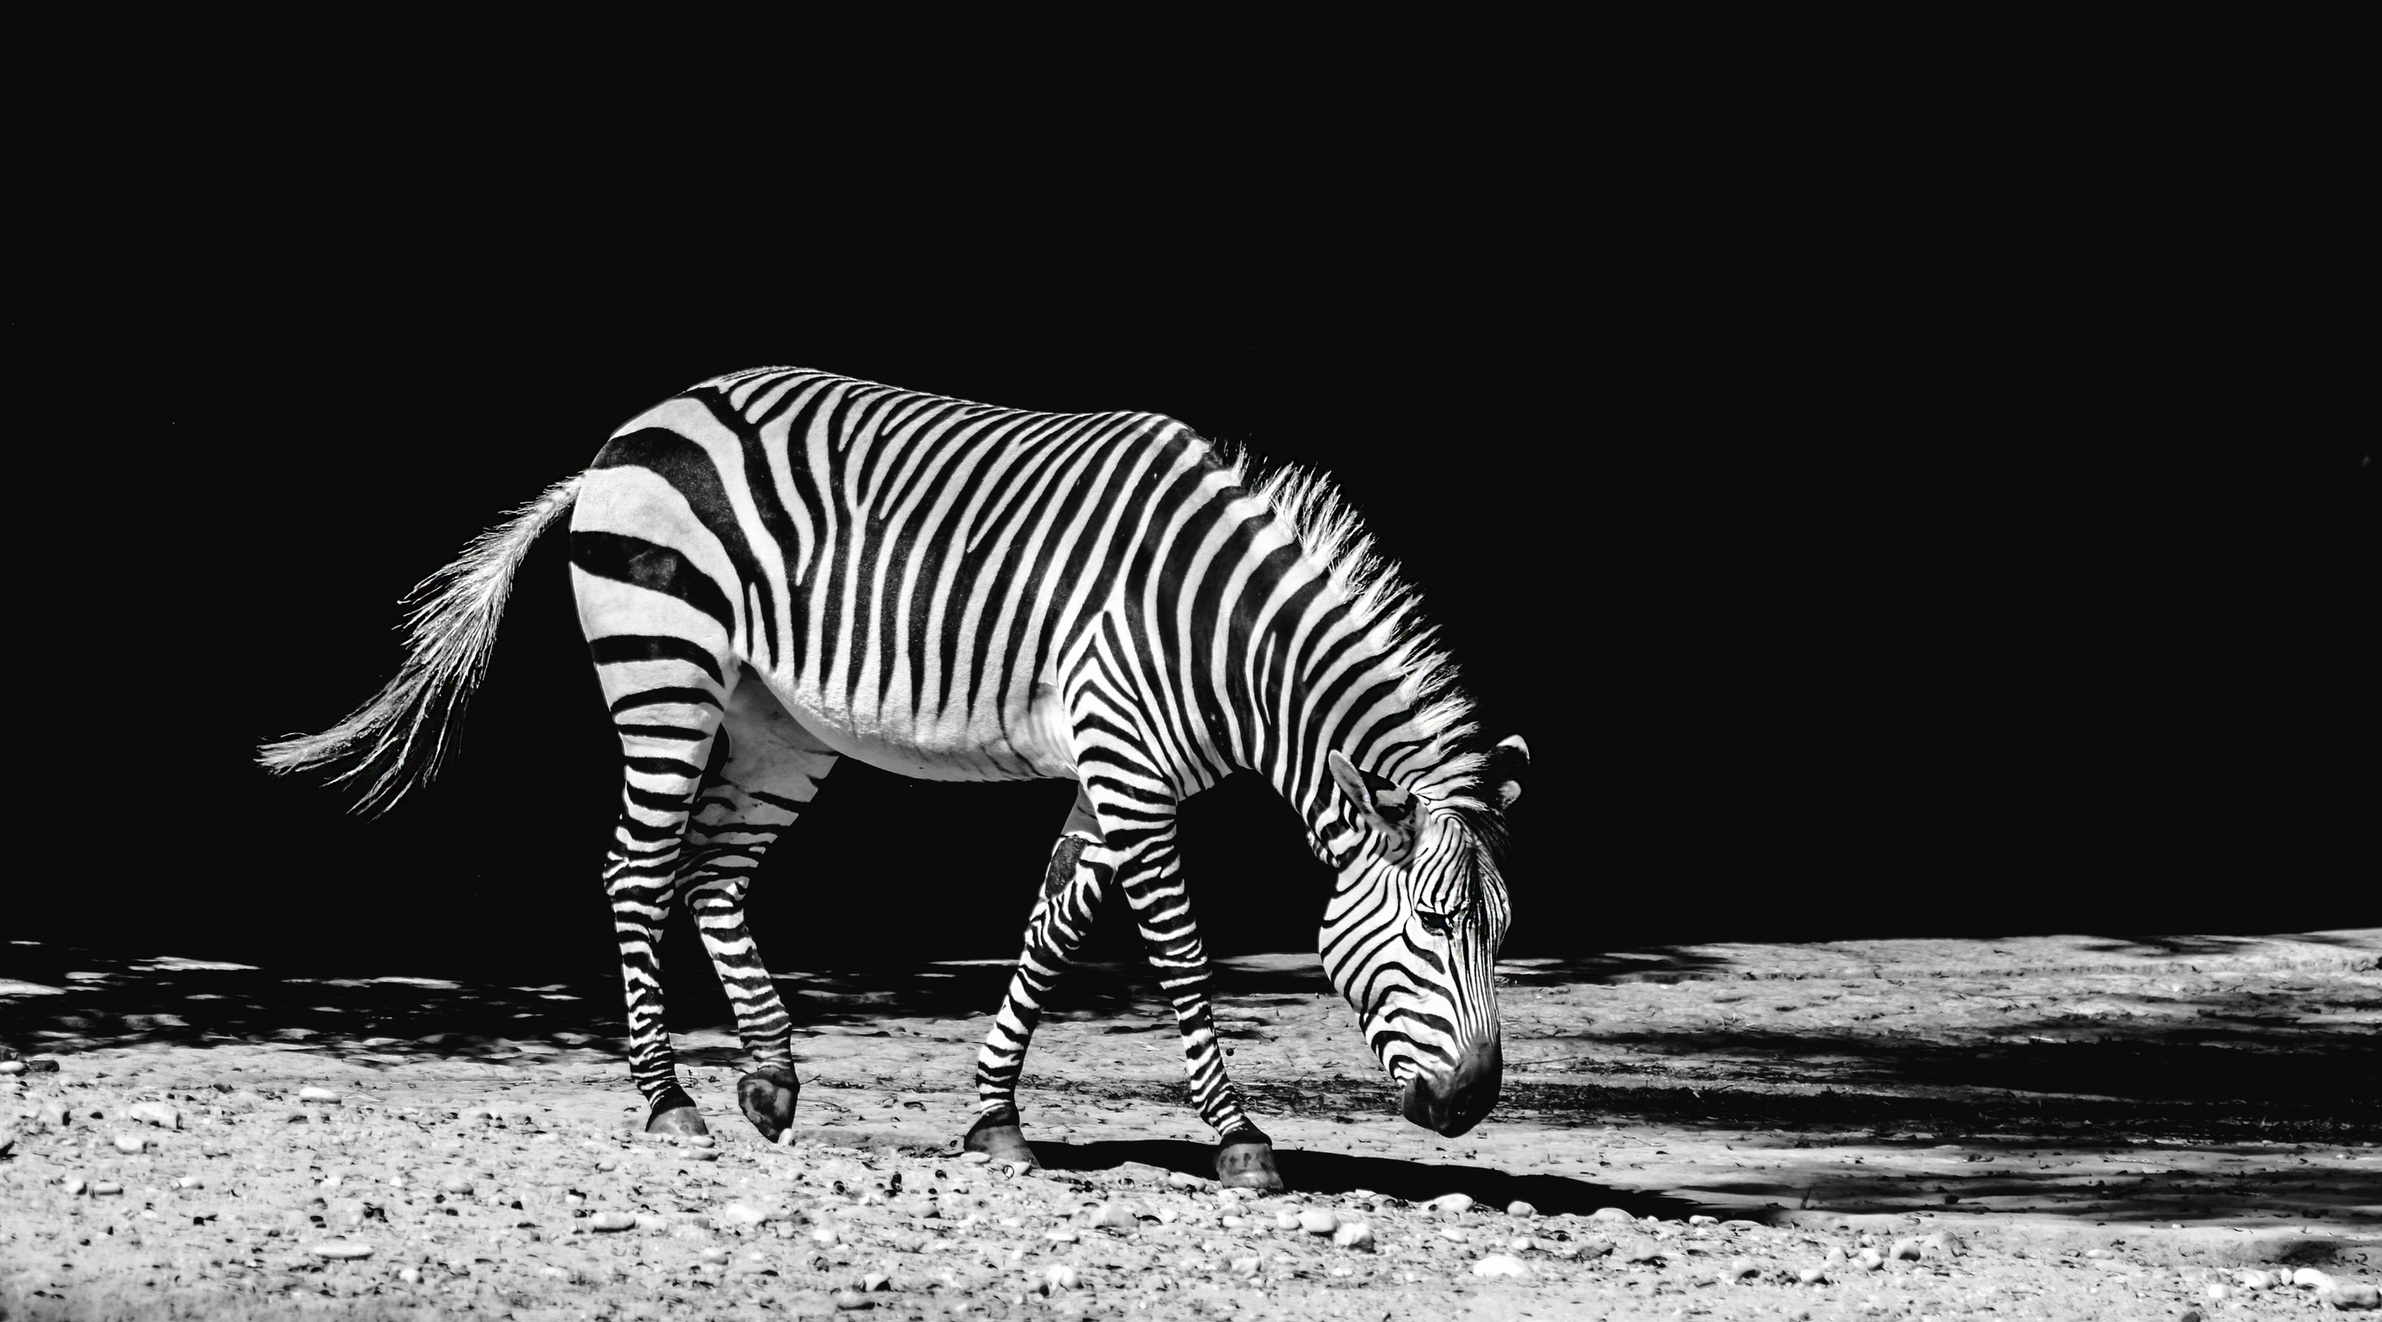 Best zebra pattern photos, Free stock photos, Versatile patterns, Stunning zebra imagery, 2390x1330 HD Desktop